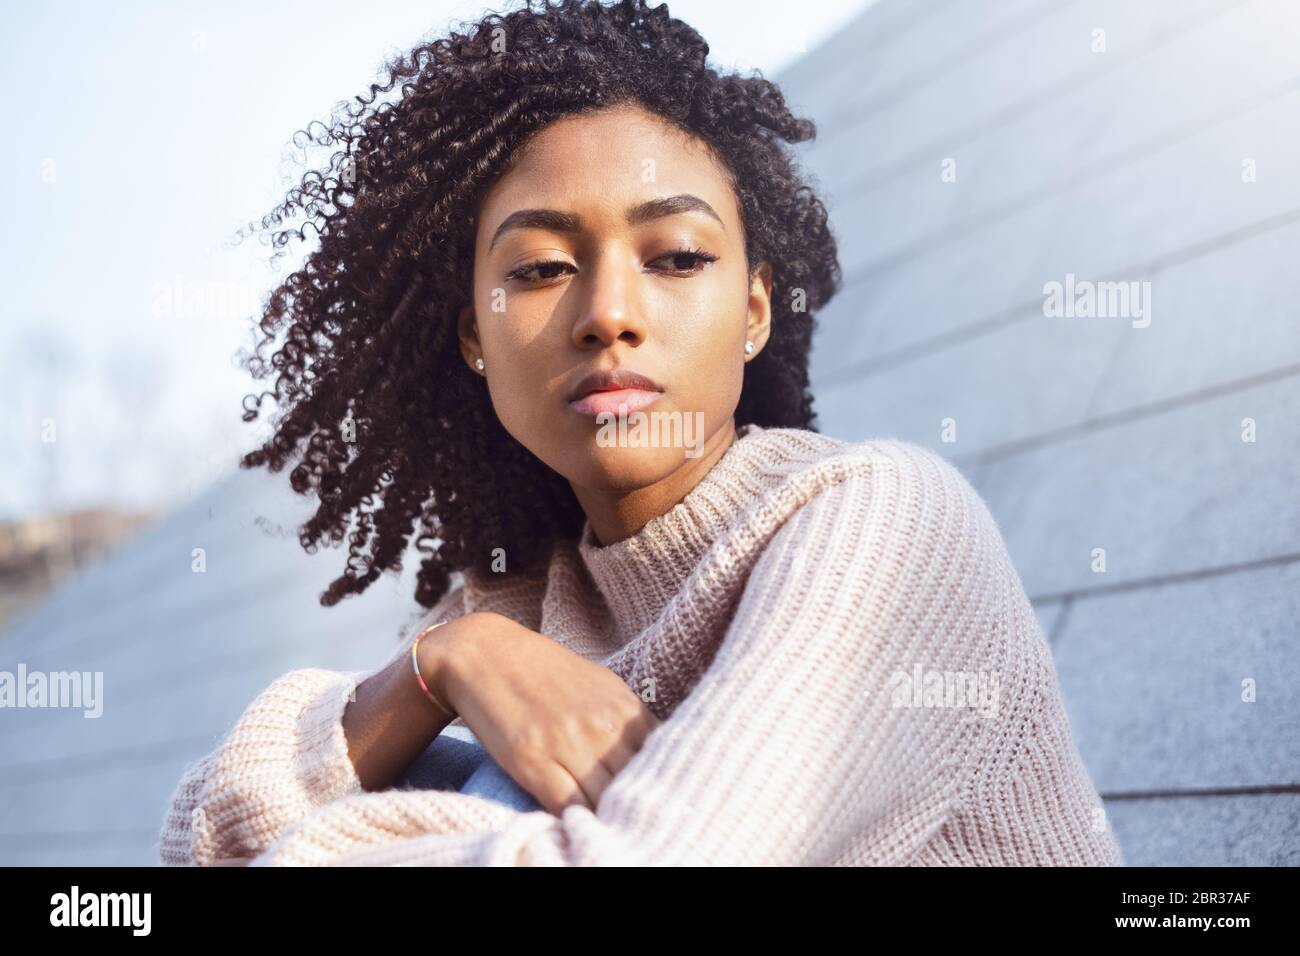 Portrait of black girl suffering solitude and depression Stock Photo